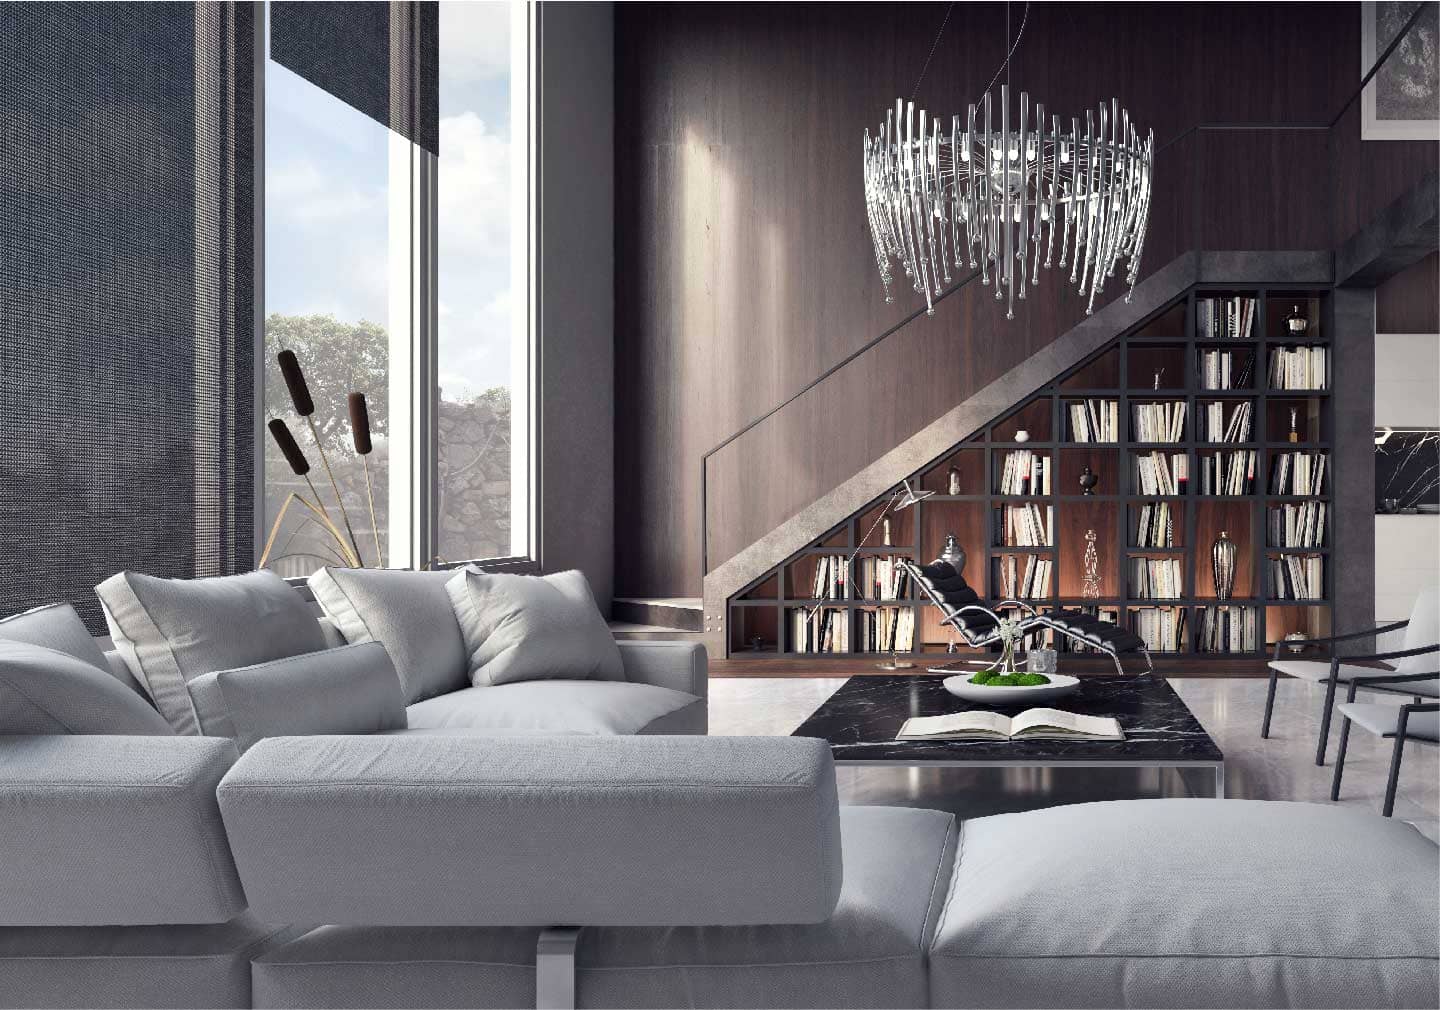 Celebrity home interiors Designs for living room